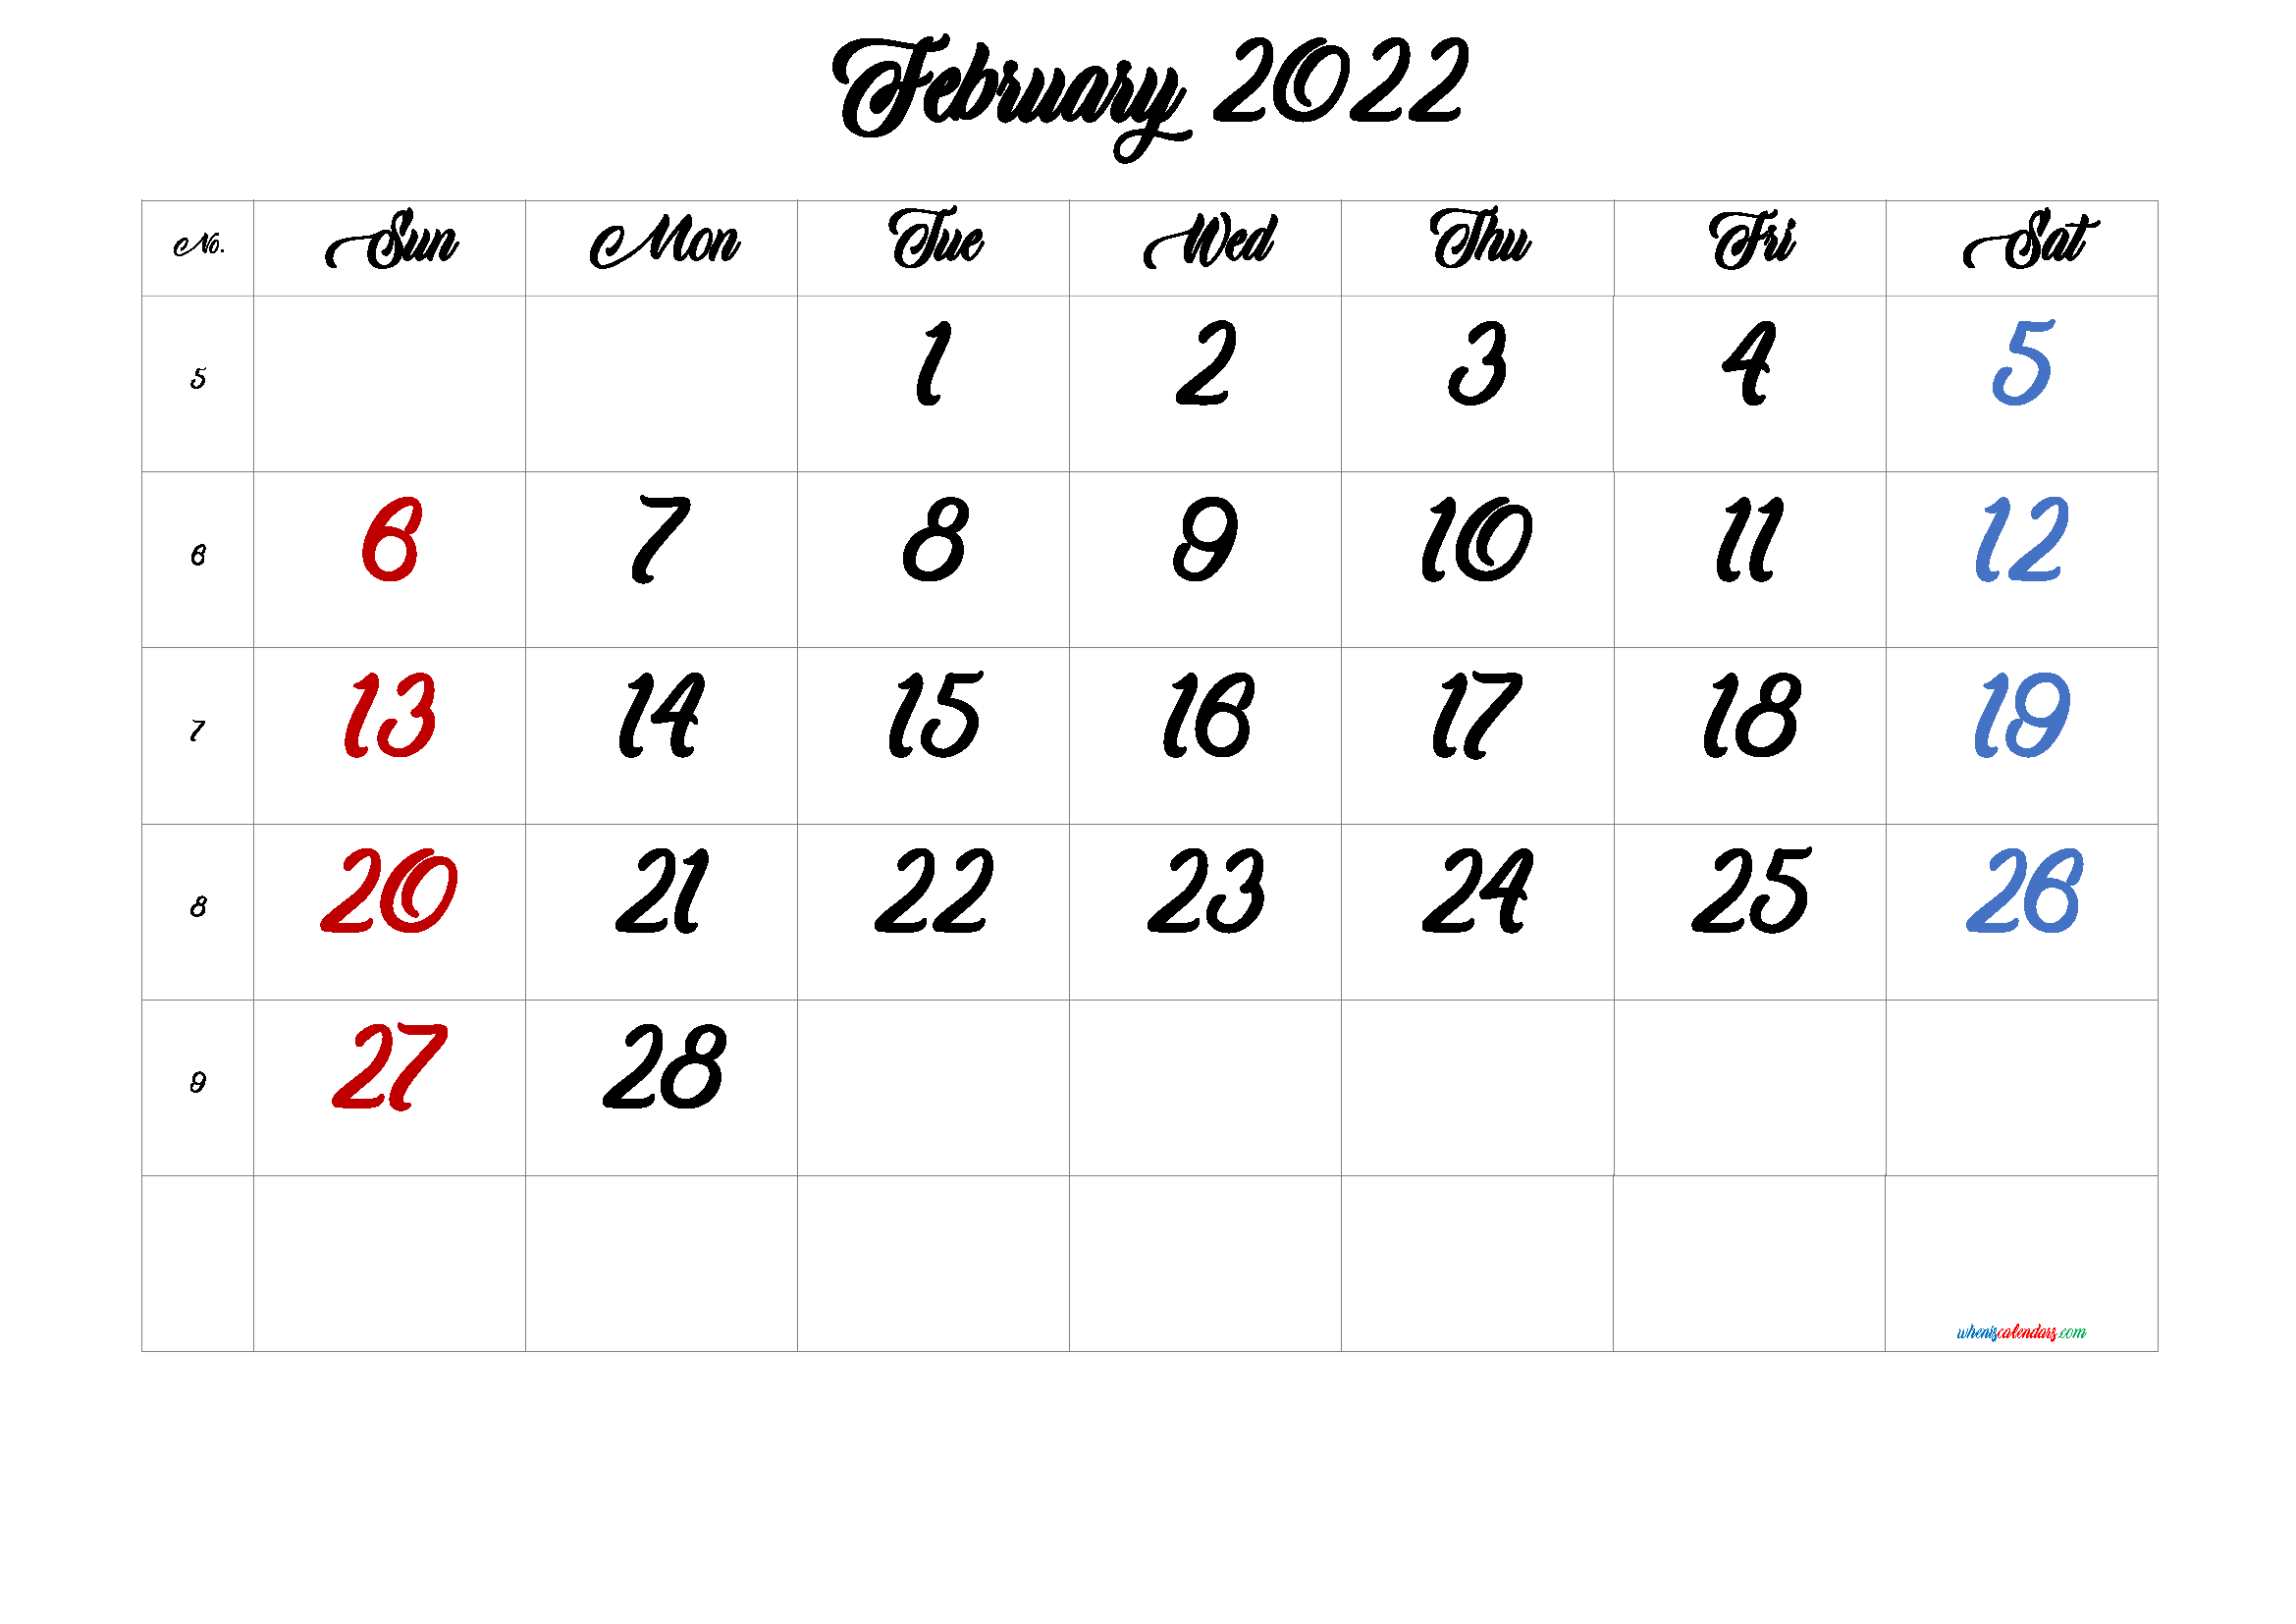 Free February Blank Calendar 2022